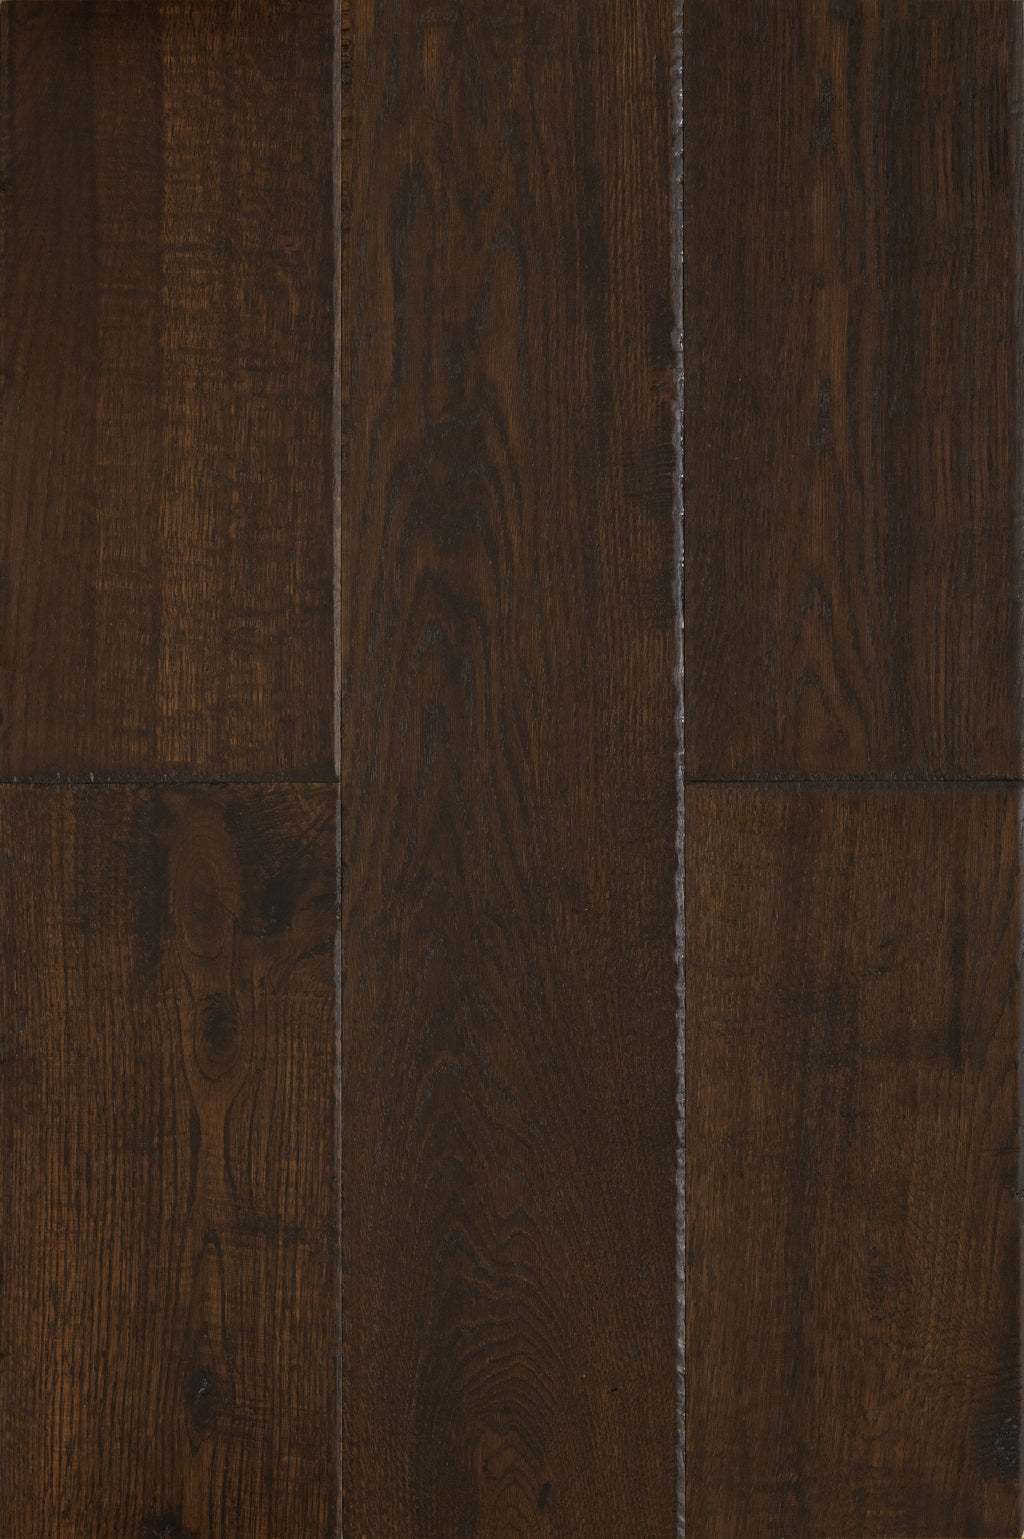 East West Furniture SP-7HH03 Sango Premier Engineered Hardwood Flooring - European Oak - 1/2 in x 7 in x Random Length Handscraped, 26.24 sqft/box, Autumn Brown